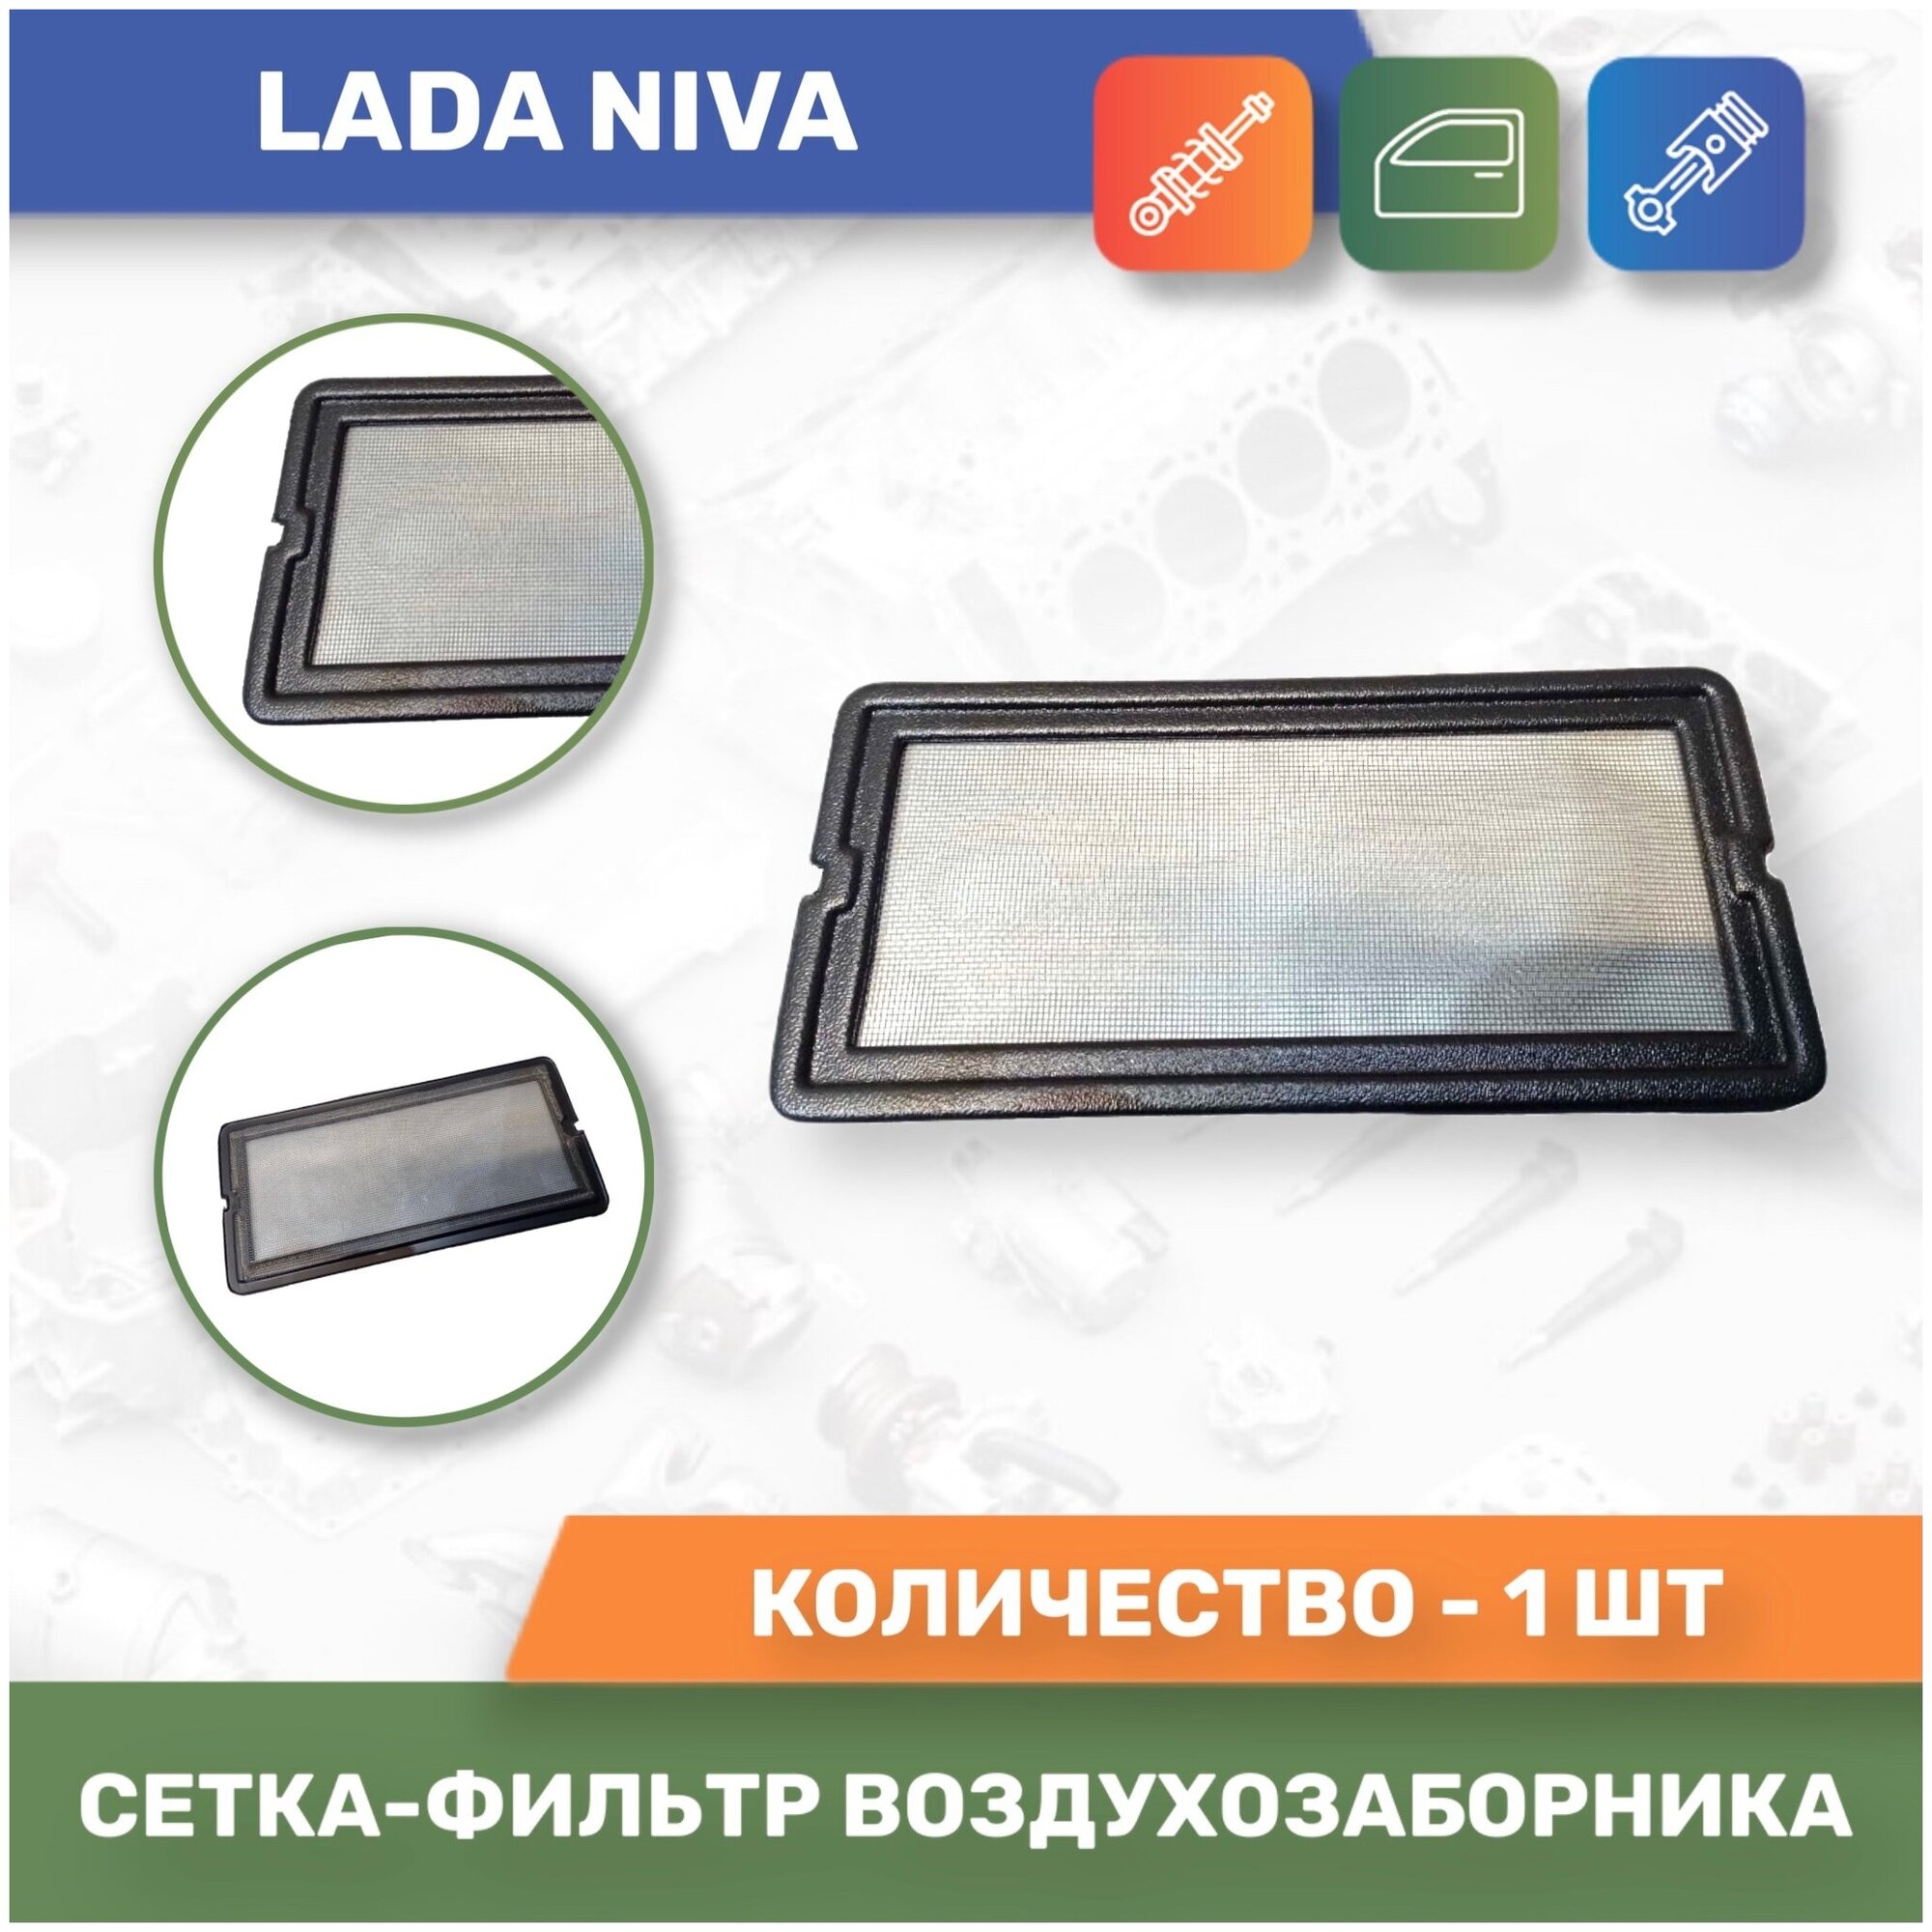 Сетка-фильтр воздухозаборника для Лада Нива / Lada Niva (Яр пласт)